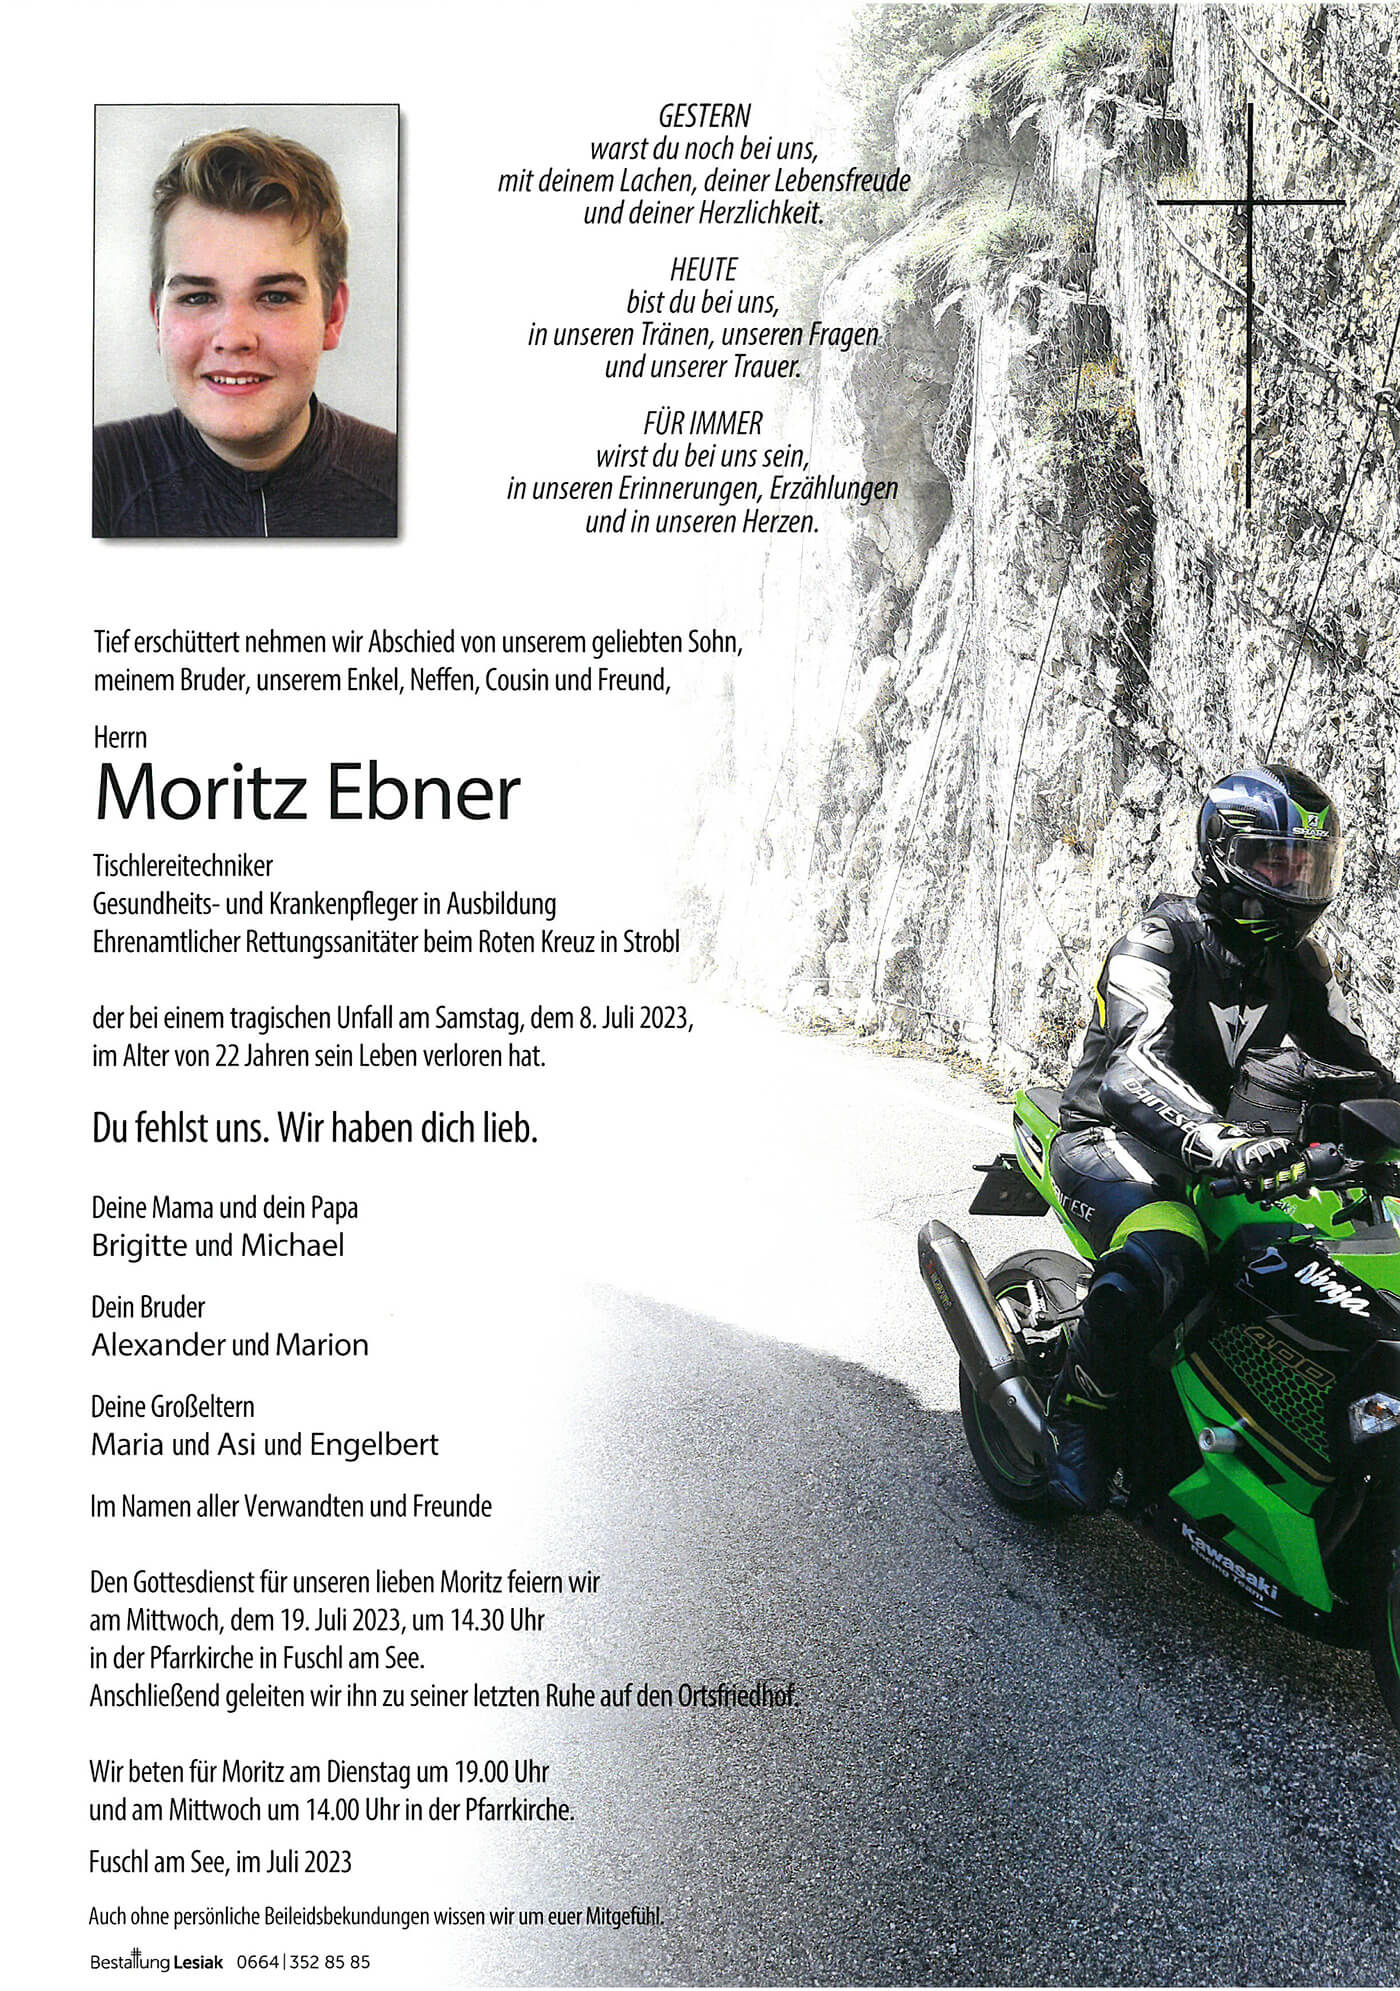 In Erinnerung an Moritz Ebner